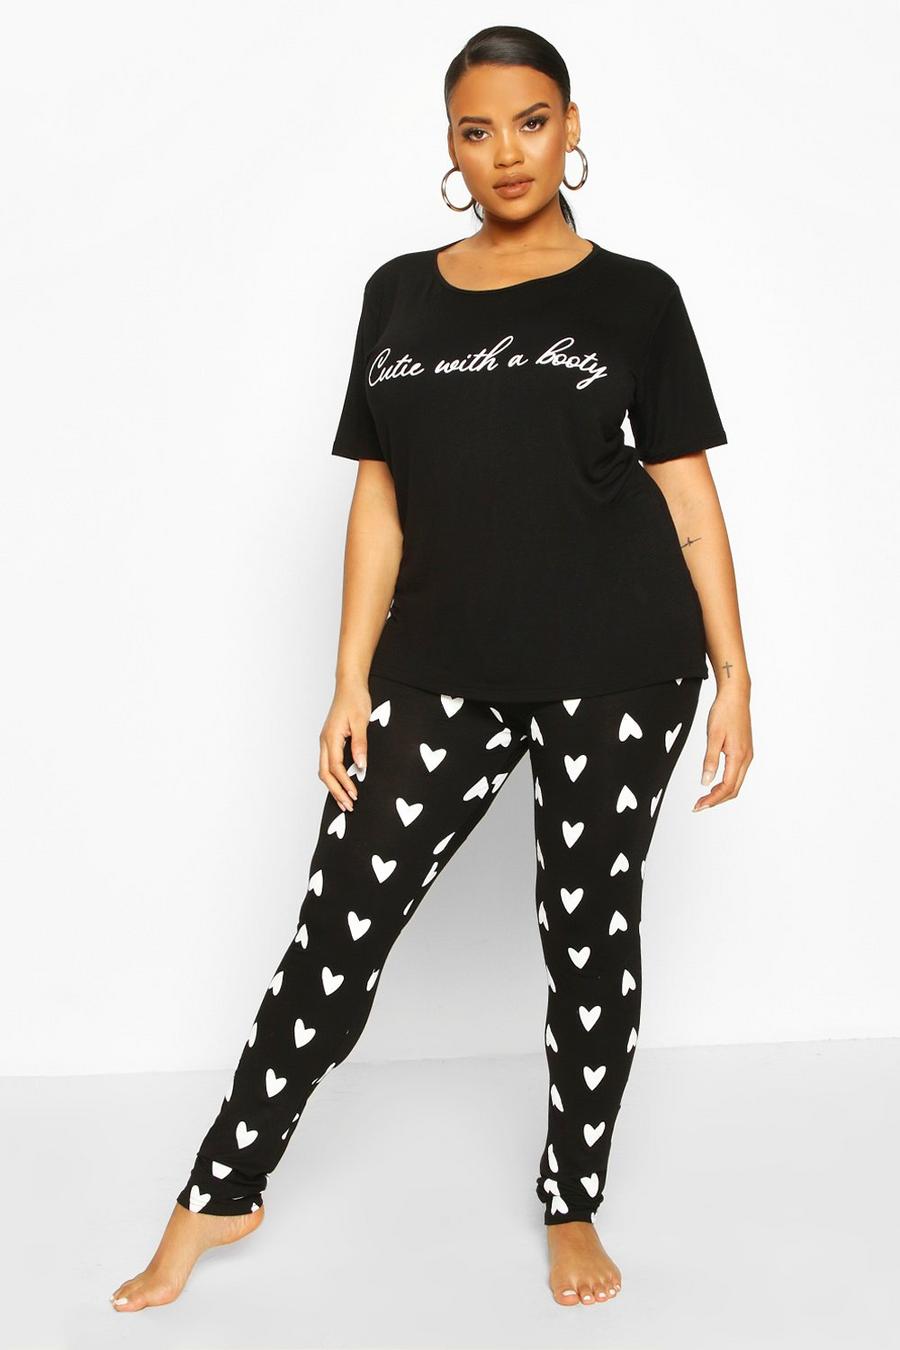 Black nero Plus 'Cutie With A Booty' Slogan Top & Heart Print Trousers Pyjama Set